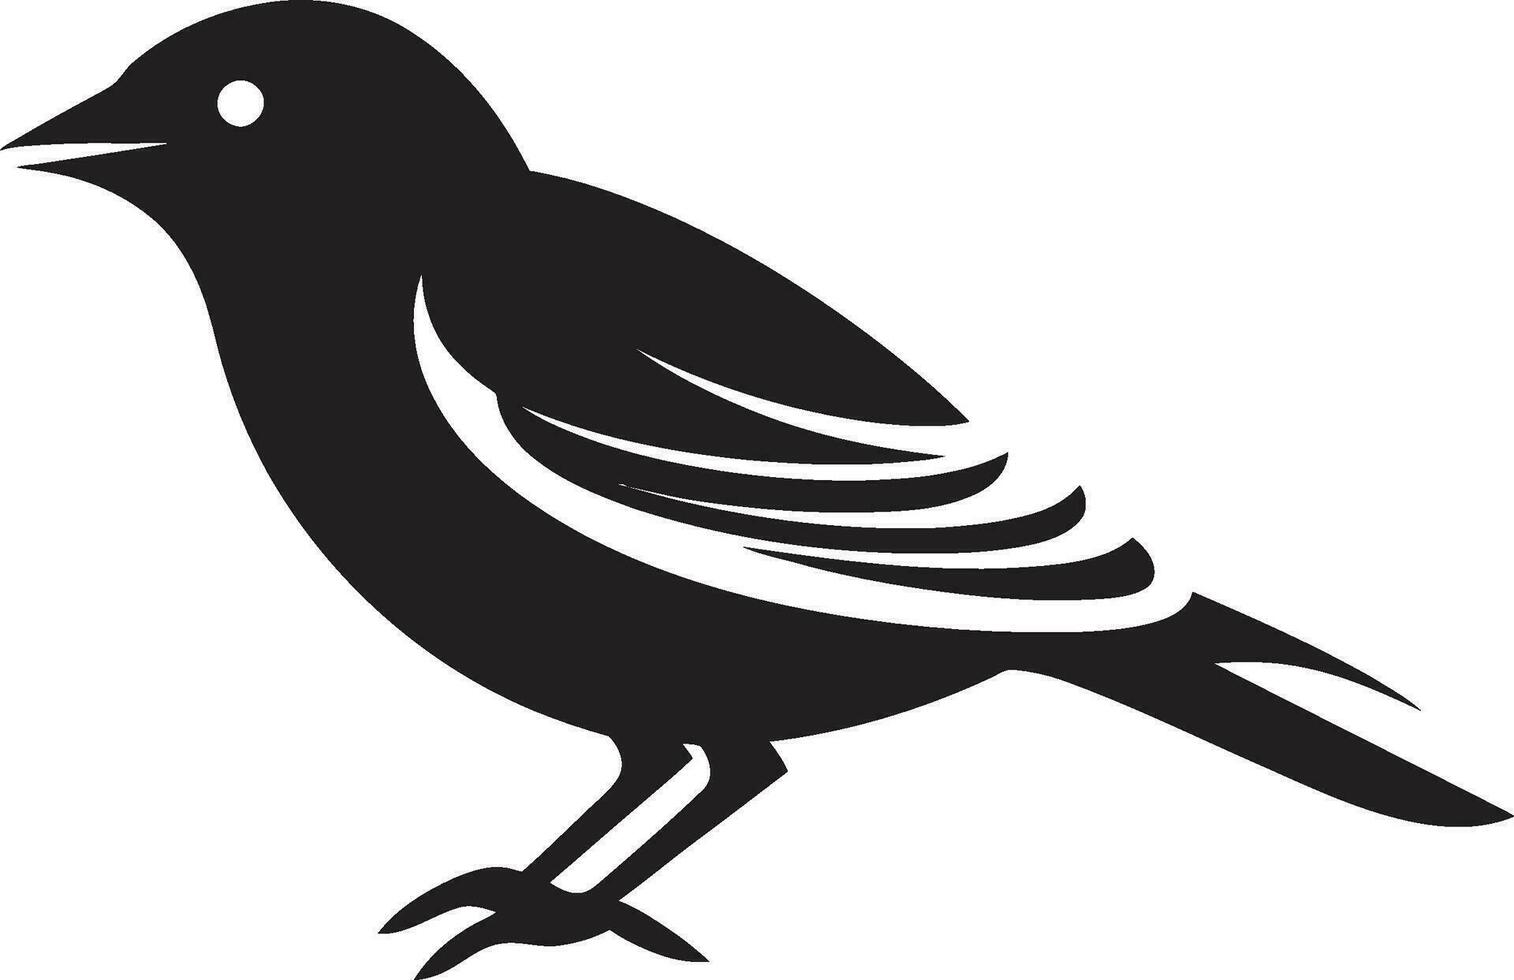 gráfico pájaro cantor símbolo vuelo de opulencia artístico con alas insignias aéreo arte vector